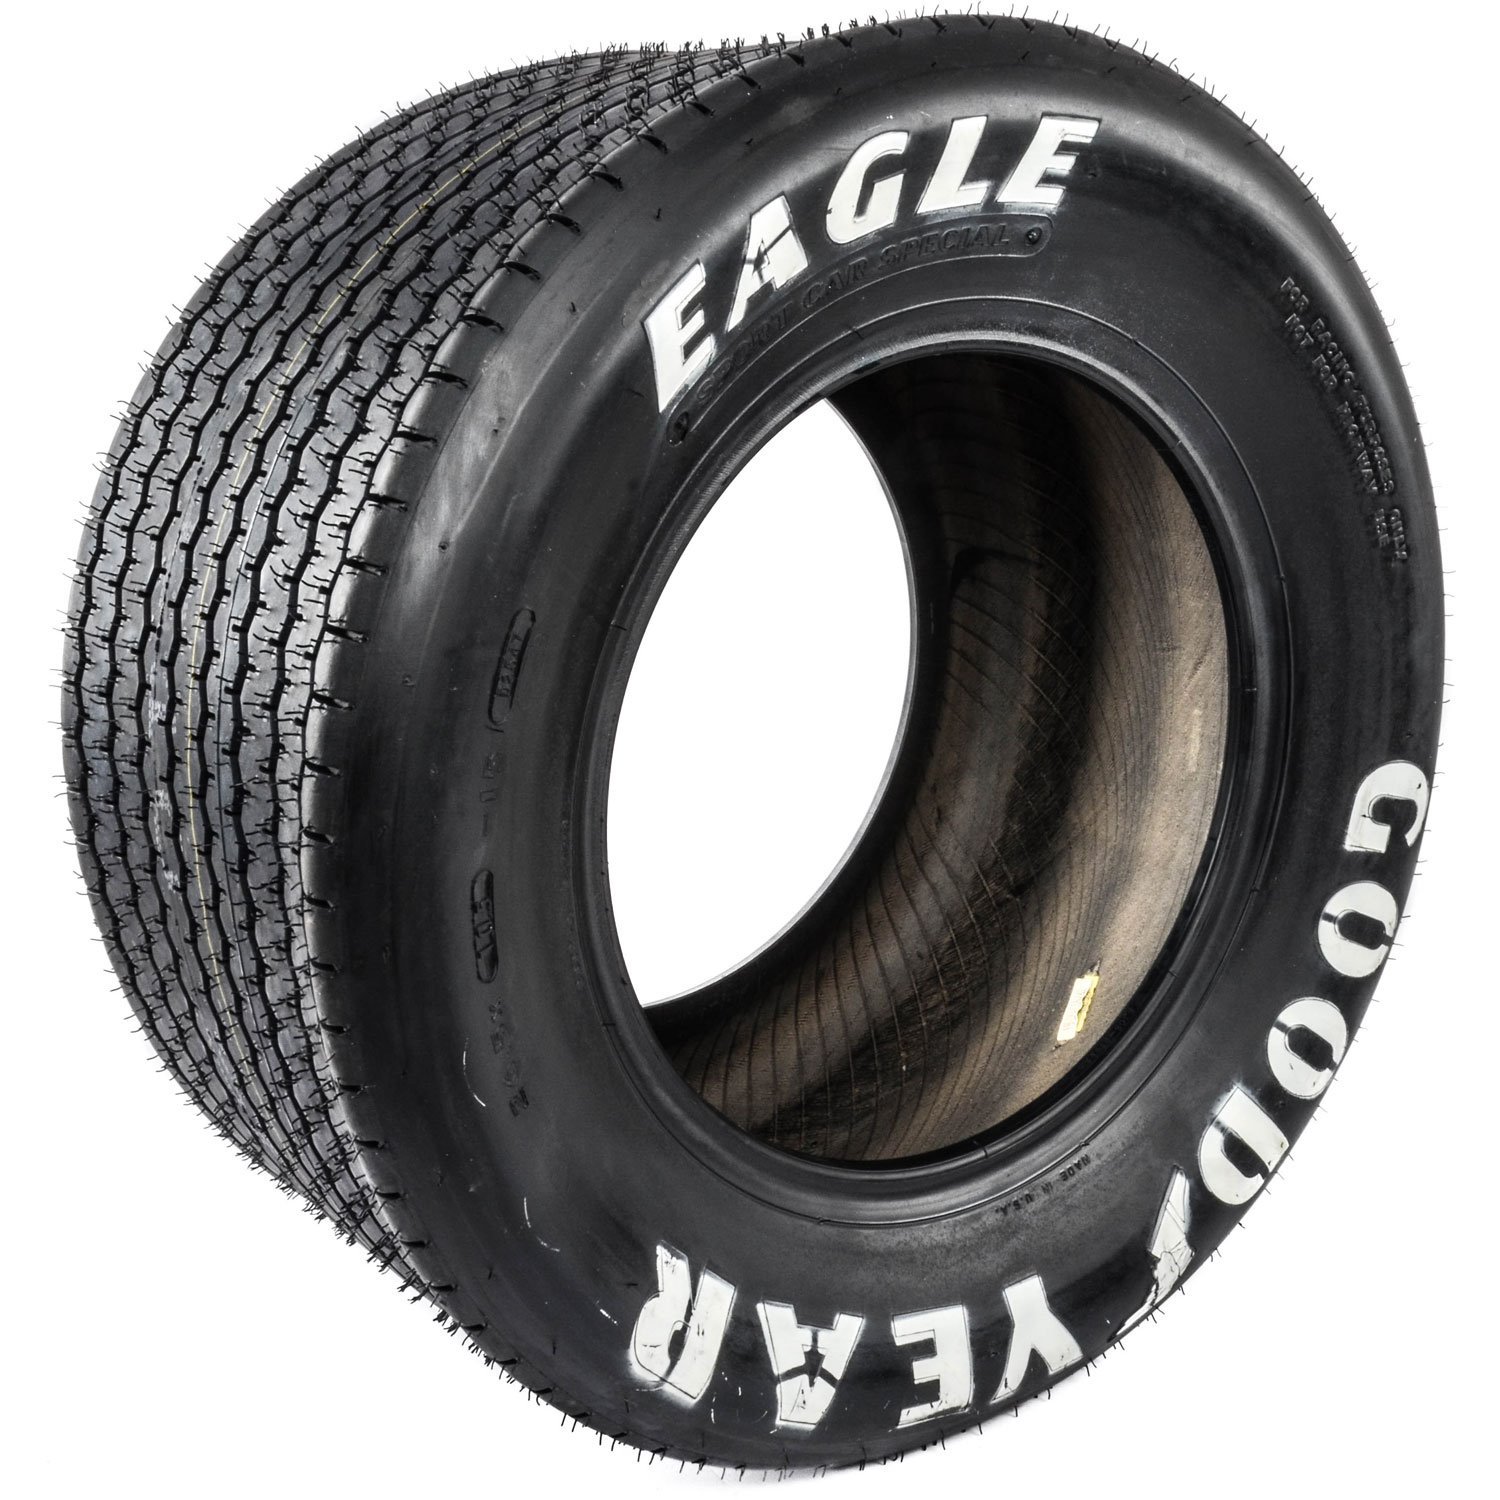 2547 Vintage Sportscar Eagle Cobra Tire, Bias Ply [26.5 x 10-15]